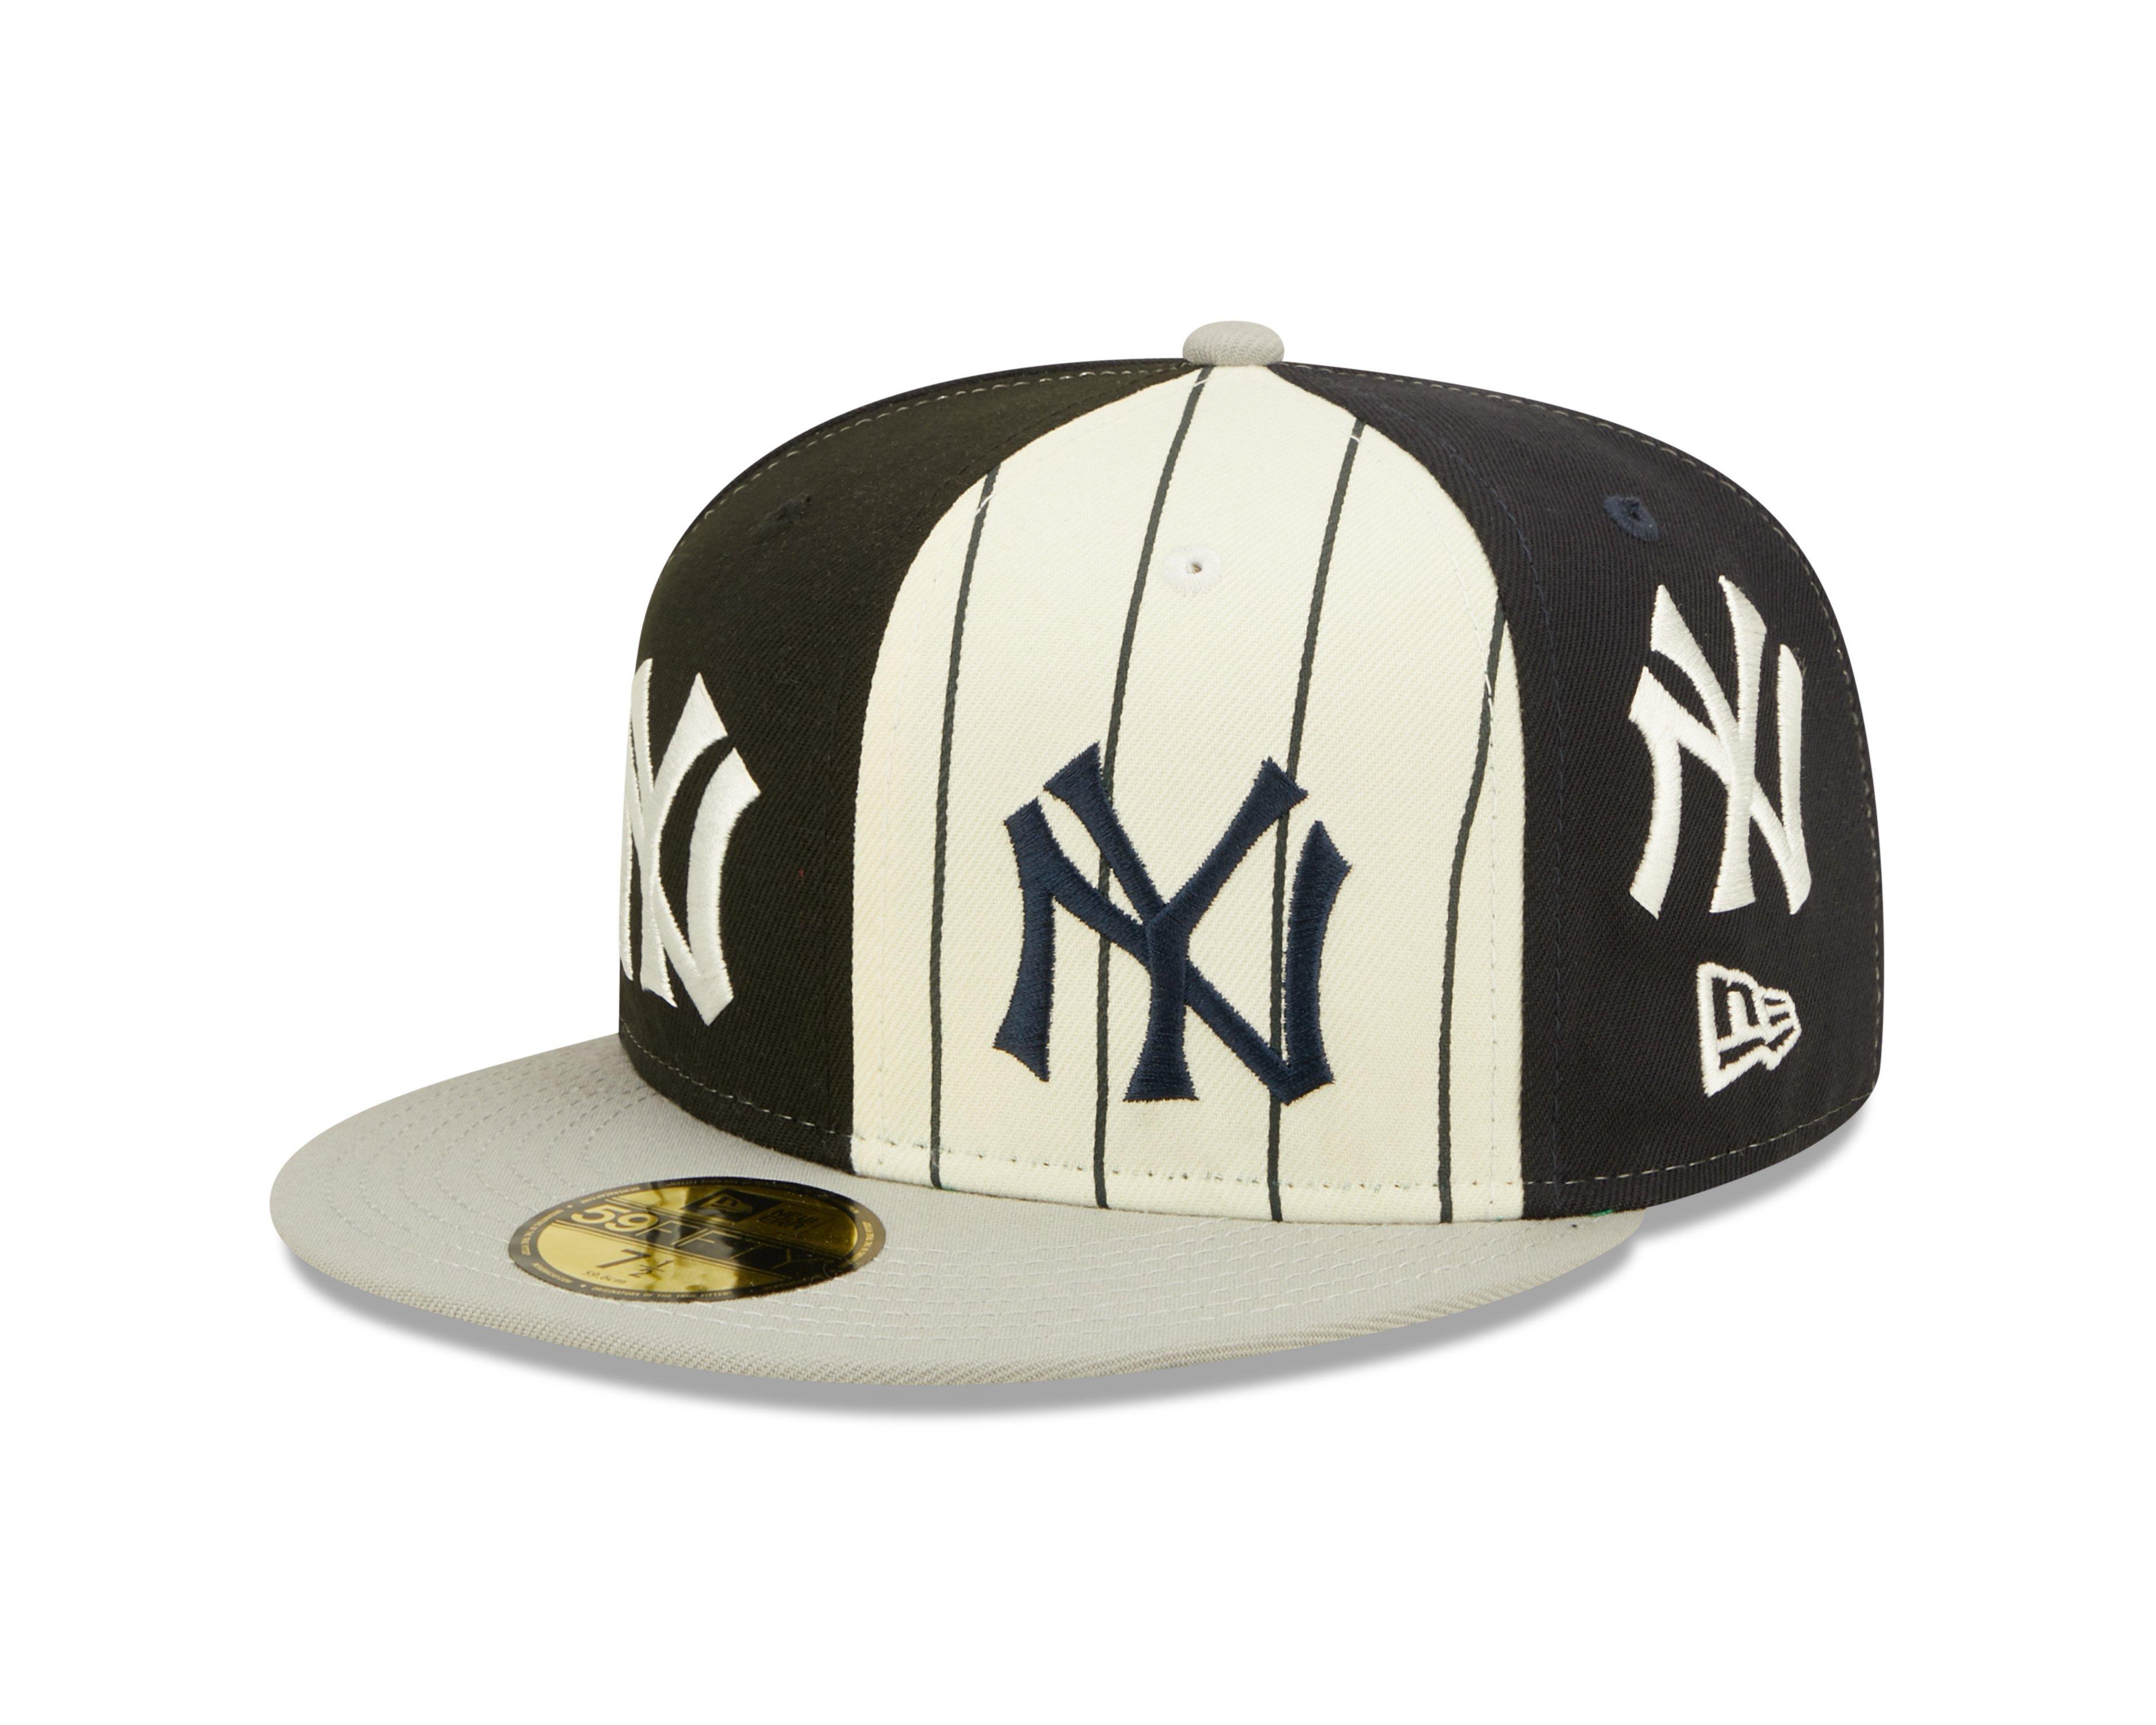 New Era New York Yankees 5950 Fitted Hat Nike Jordan 7 Retro Orange Green  Cap